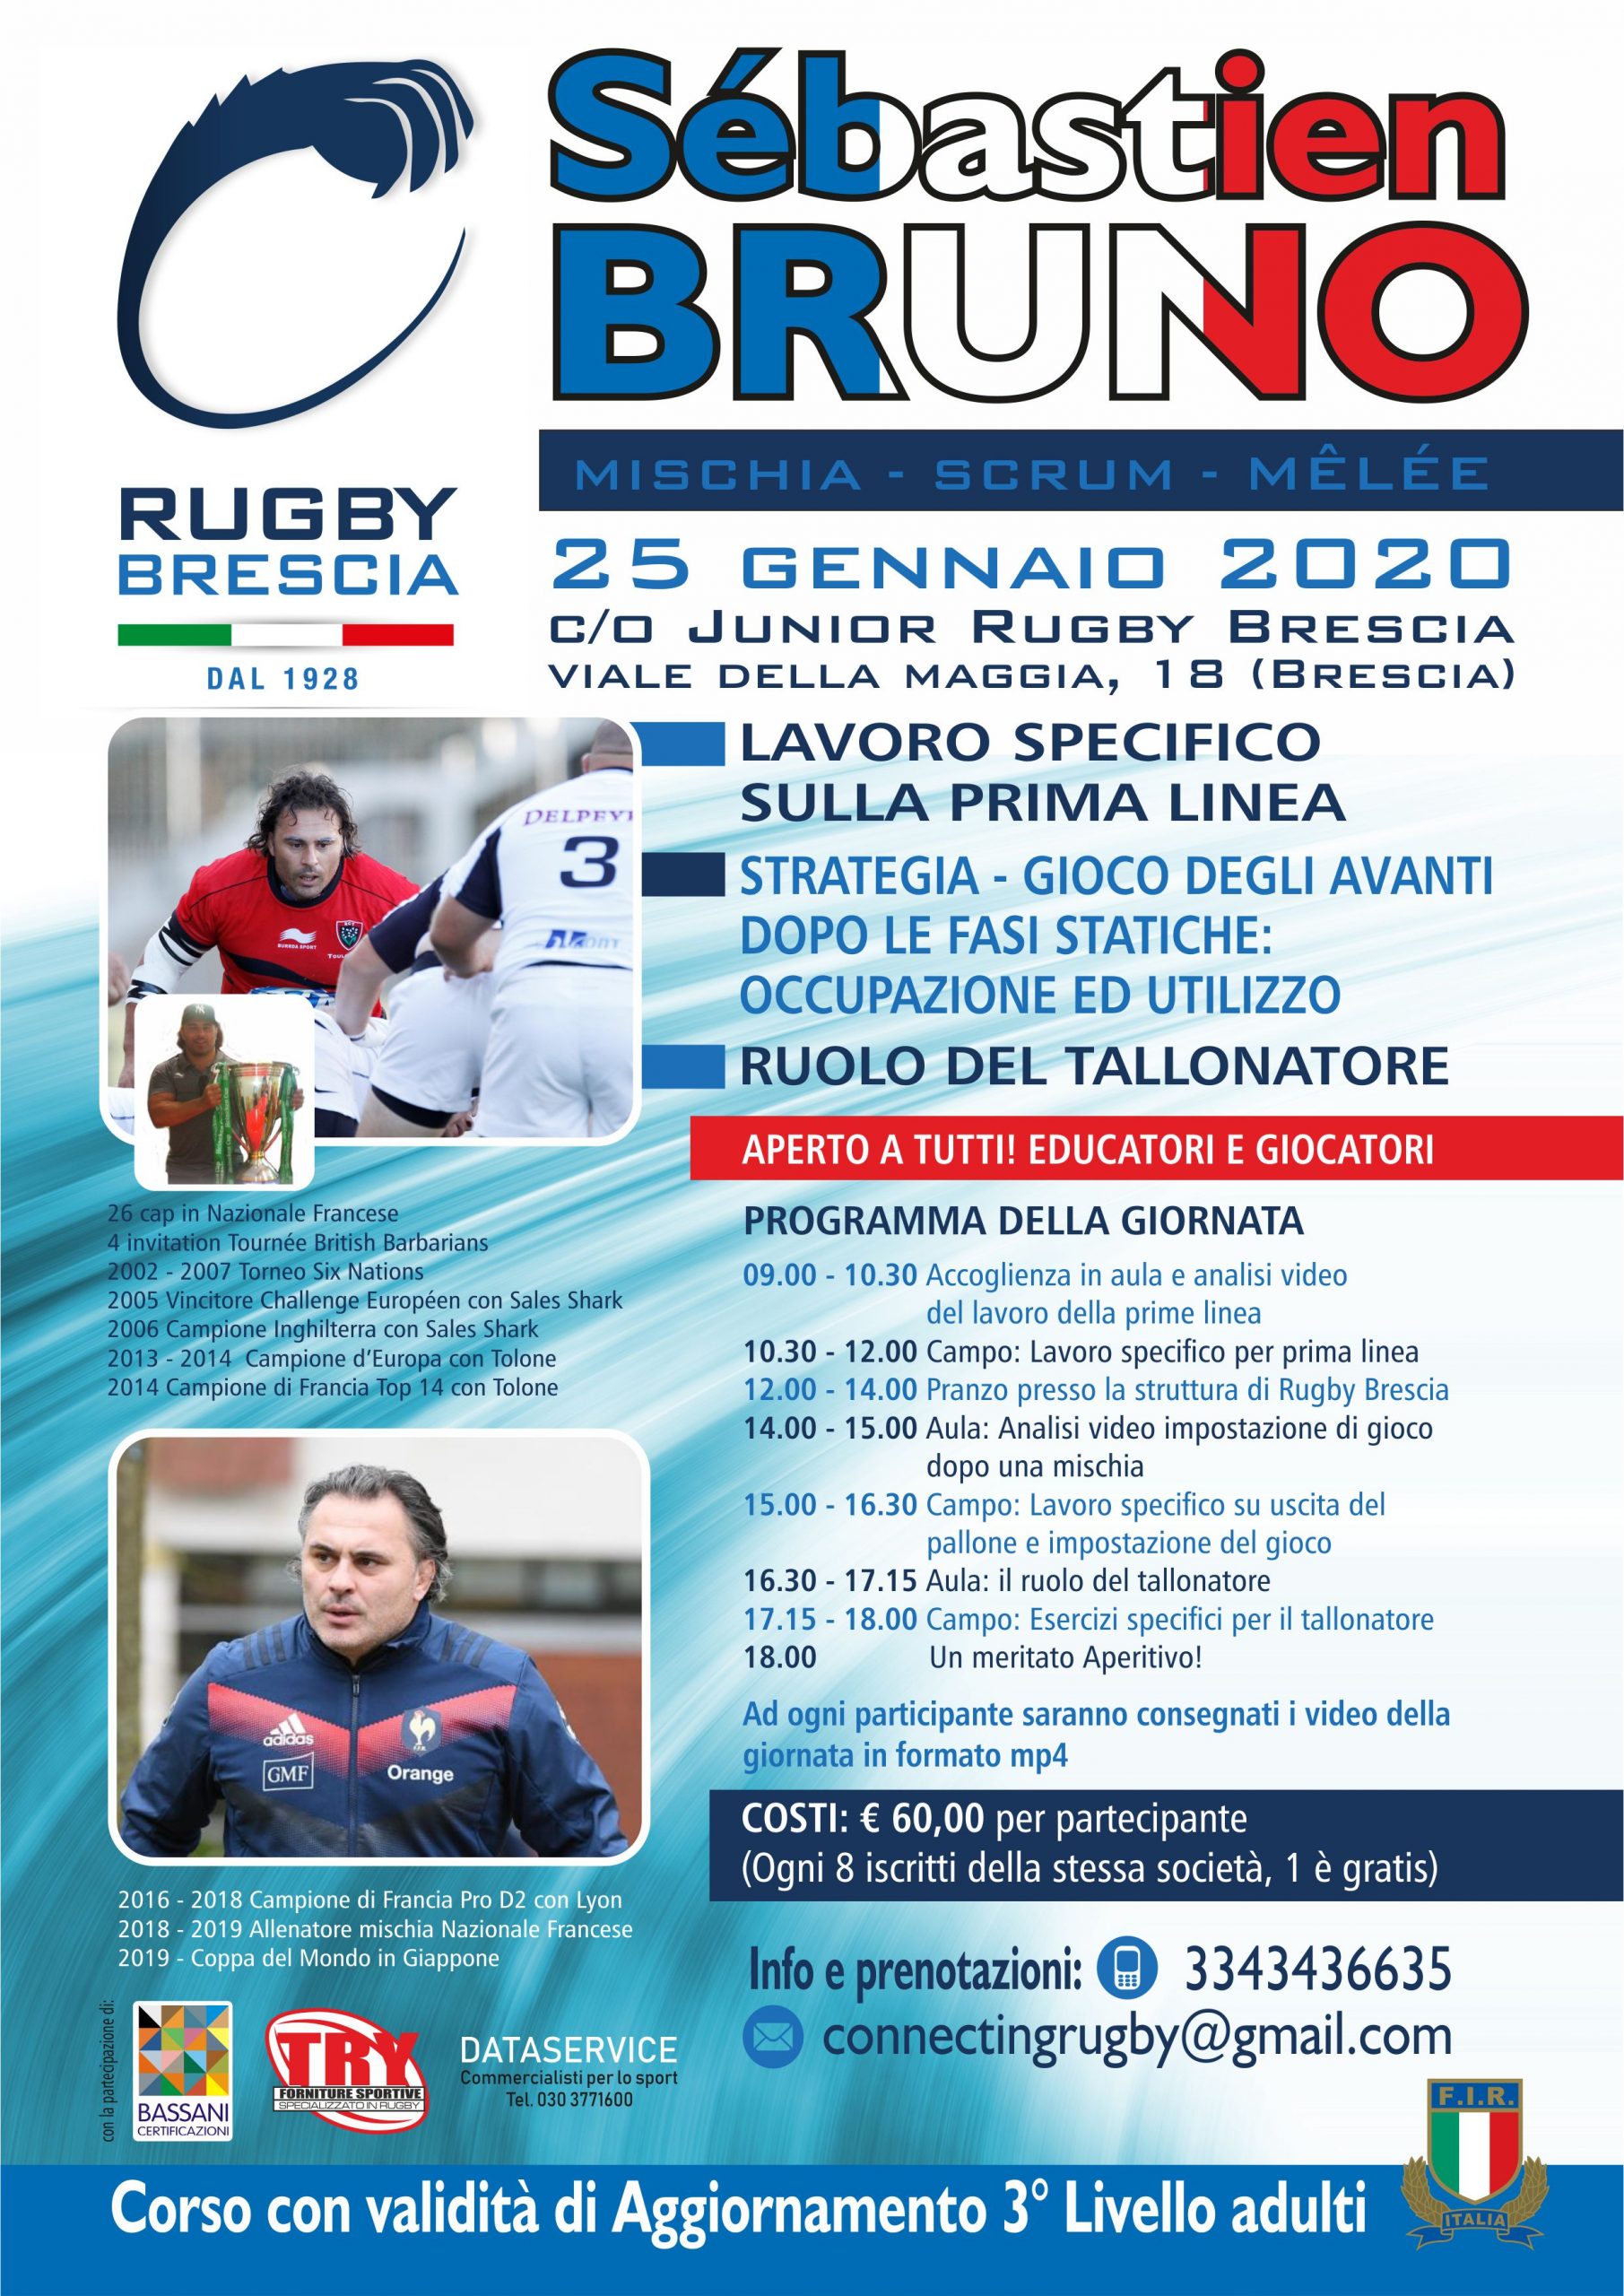 Stage 25 Gennaio 2020 a Brescia